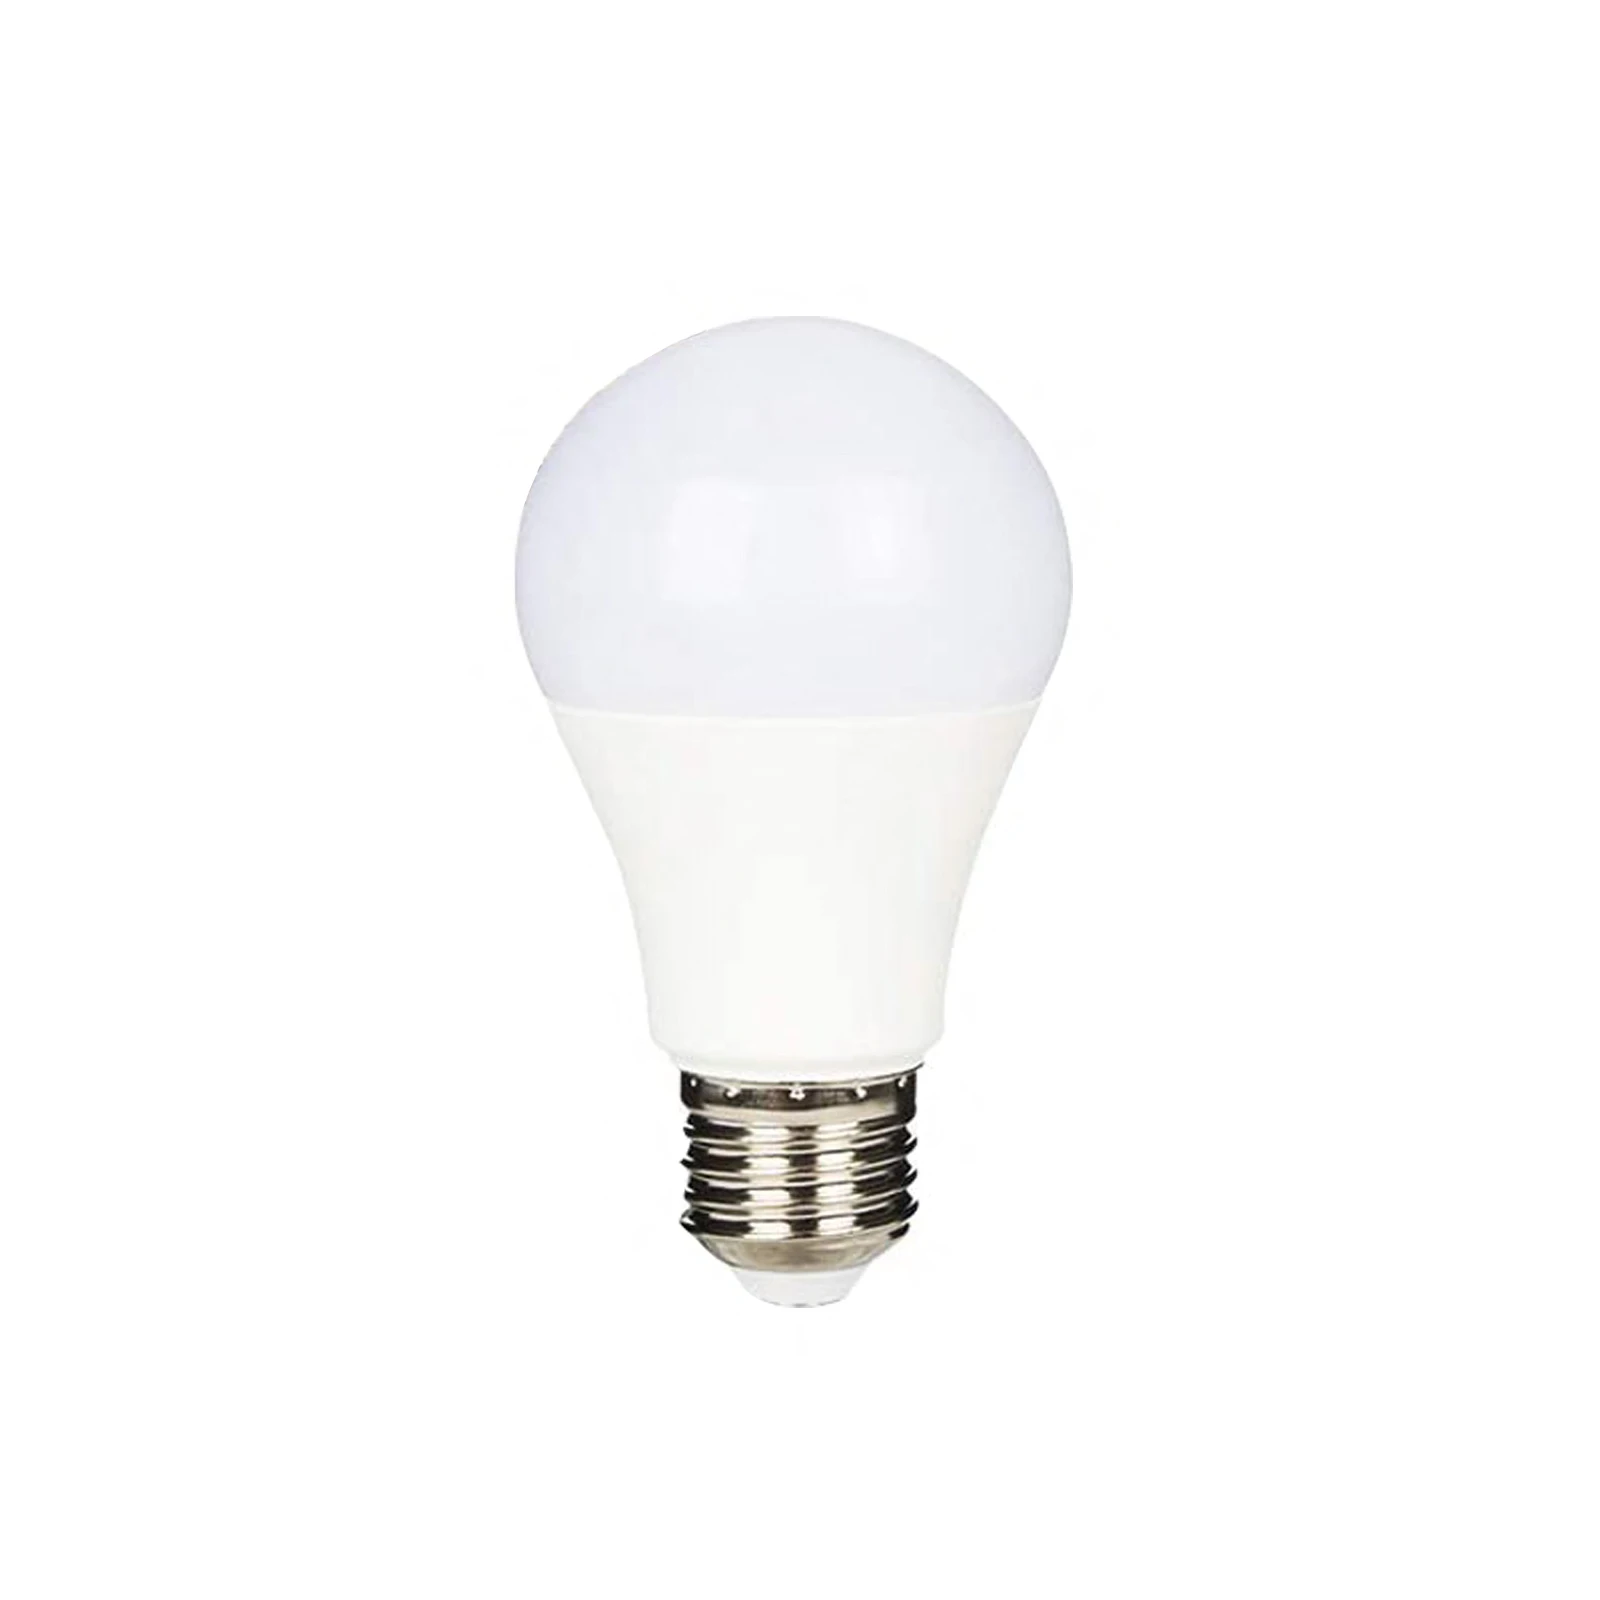 12V LED Bulb 7W 700Lm E26/E27 Standard Base 60W Equivalent 12 Volt Low Voltage Lights AC/DC 12-24V A19 Lamp Cool White 6500K